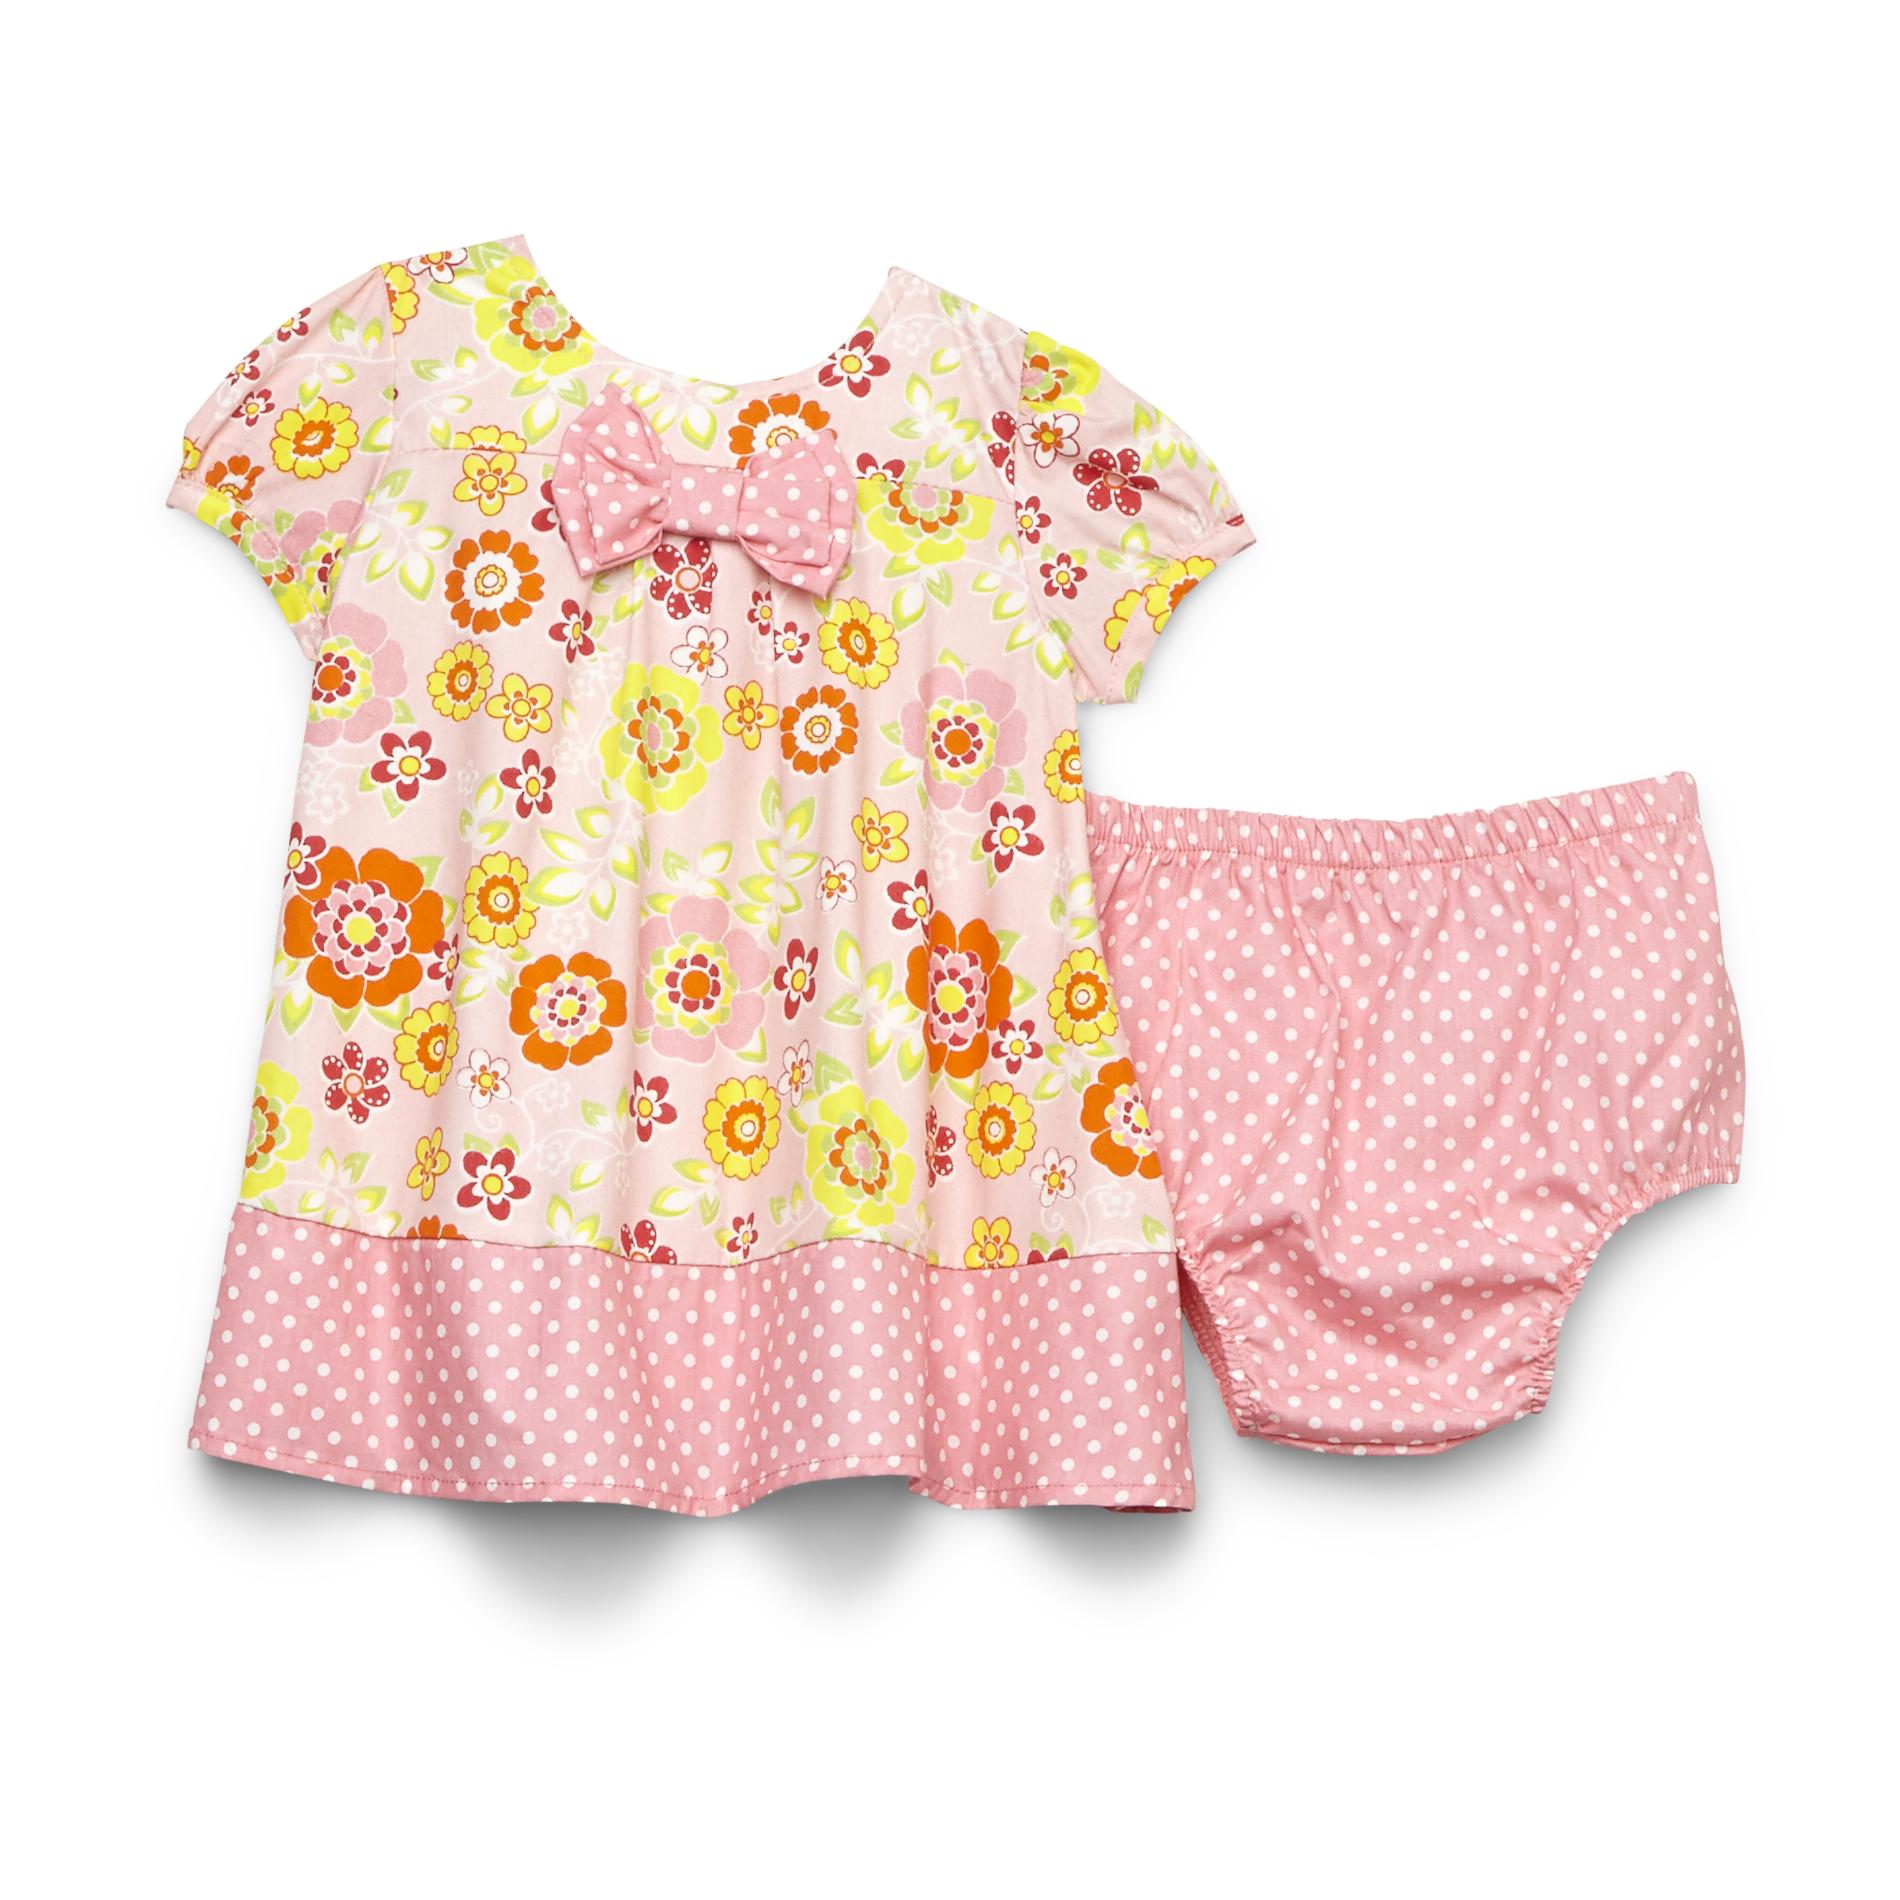 Small Wonders Newborn Girl's Dress & Diaper Cover - Floral & Polka Dot